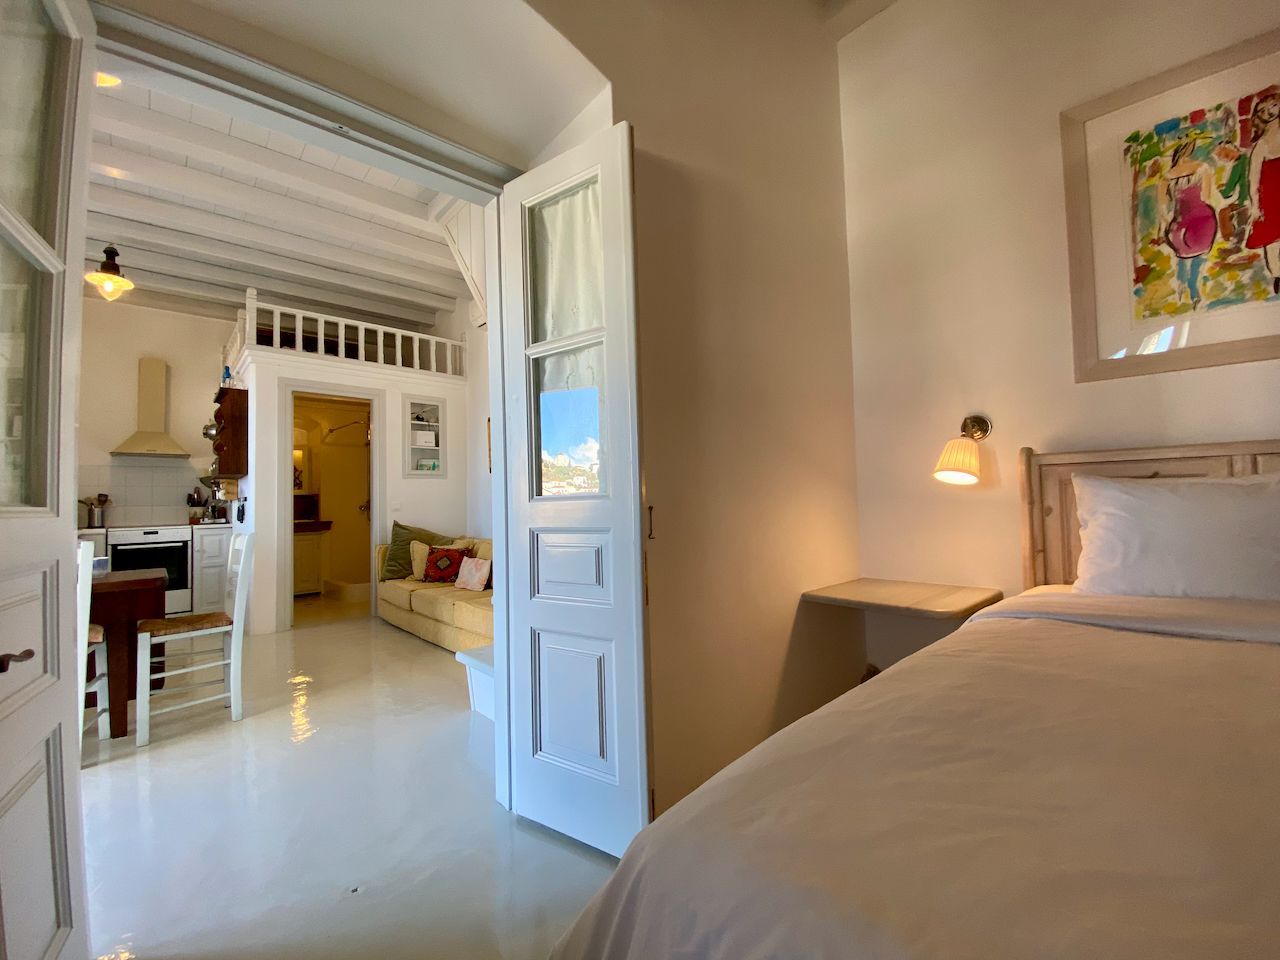 Hydra Homesteads, luxury holiday accommodation on Hydra Island Greece.